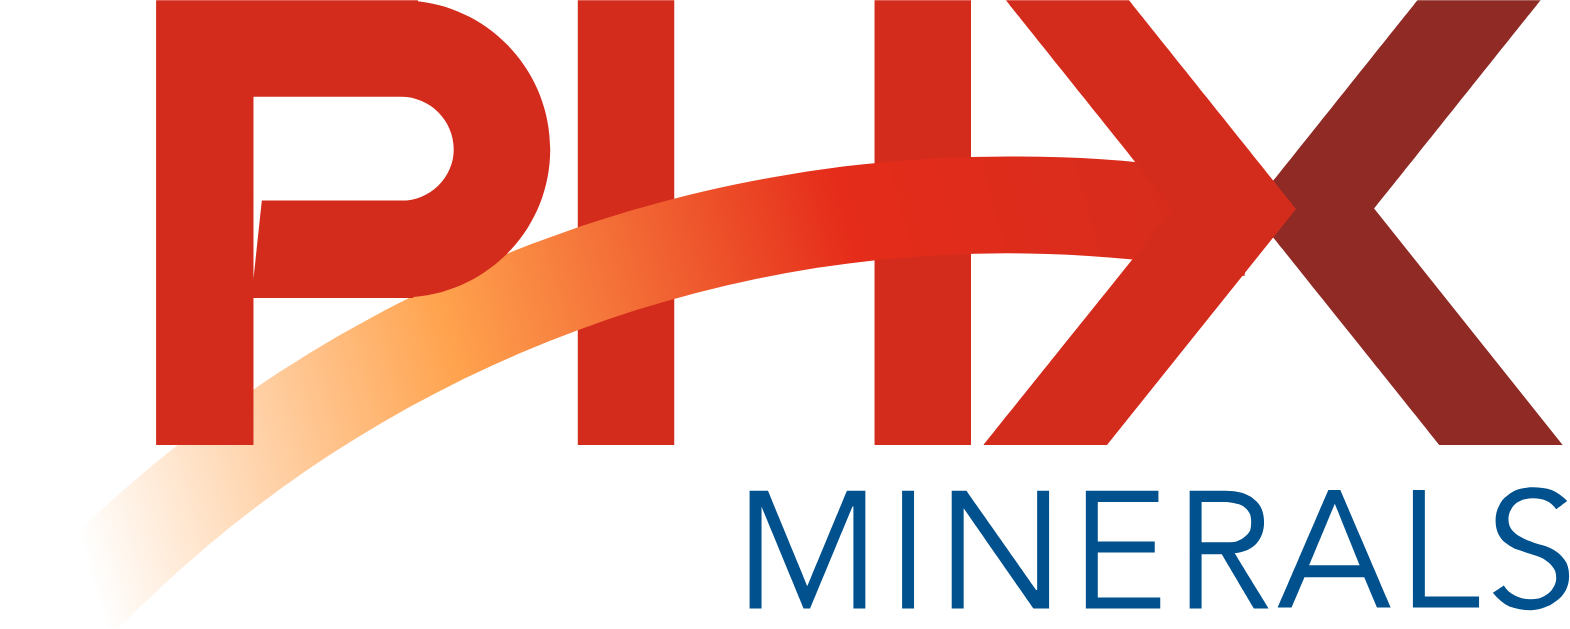 PHX Minerals logo (PNG transparent)